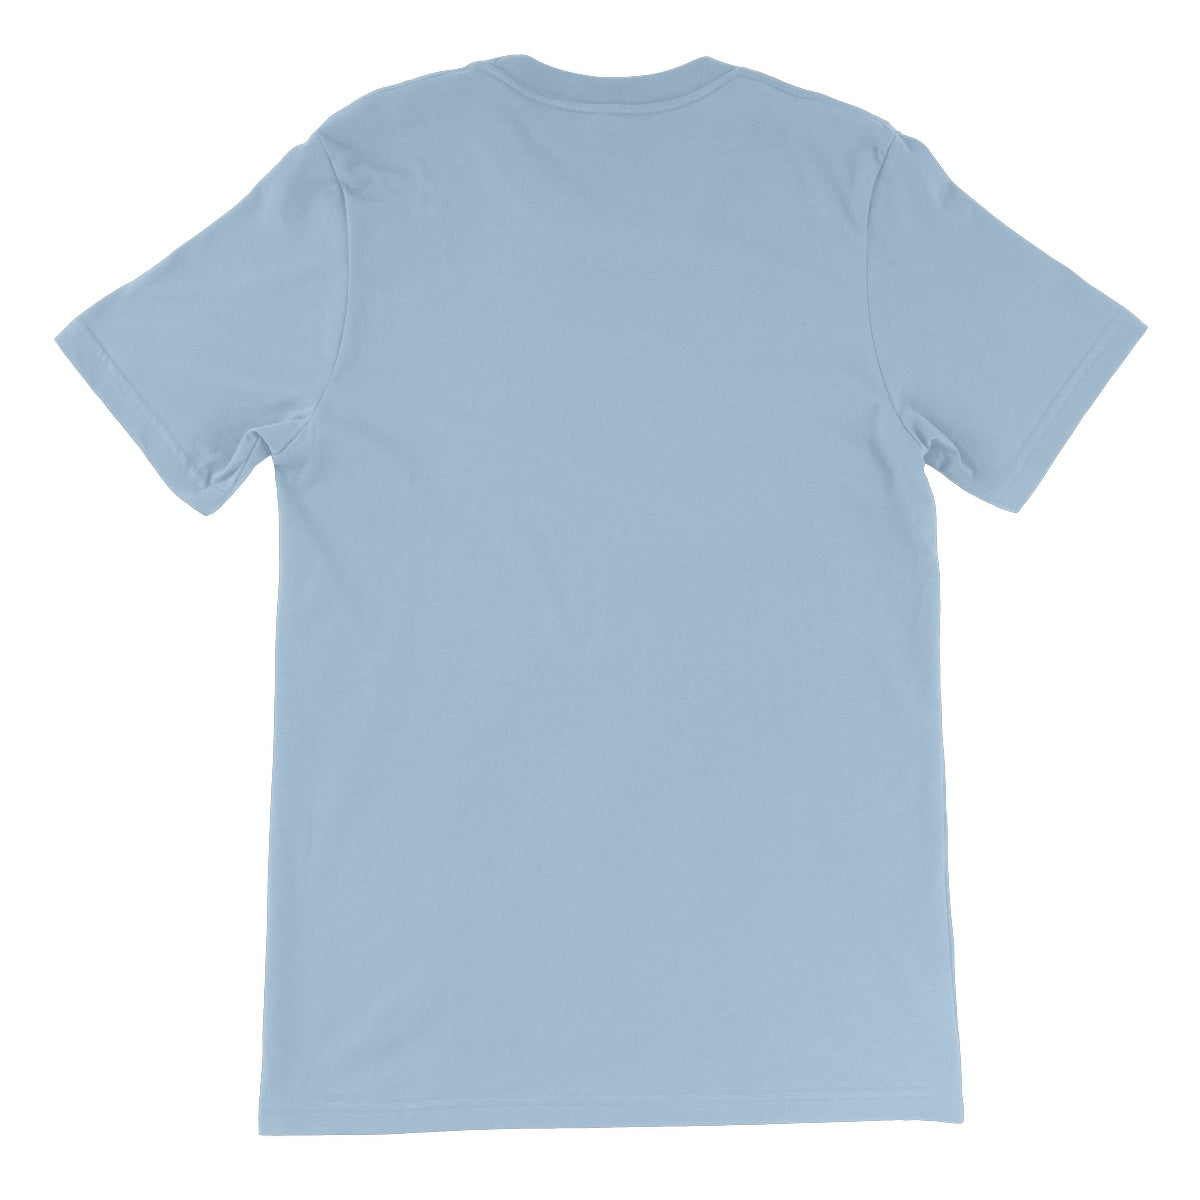 The Beans Unisex Short Sleeve T-Shirt